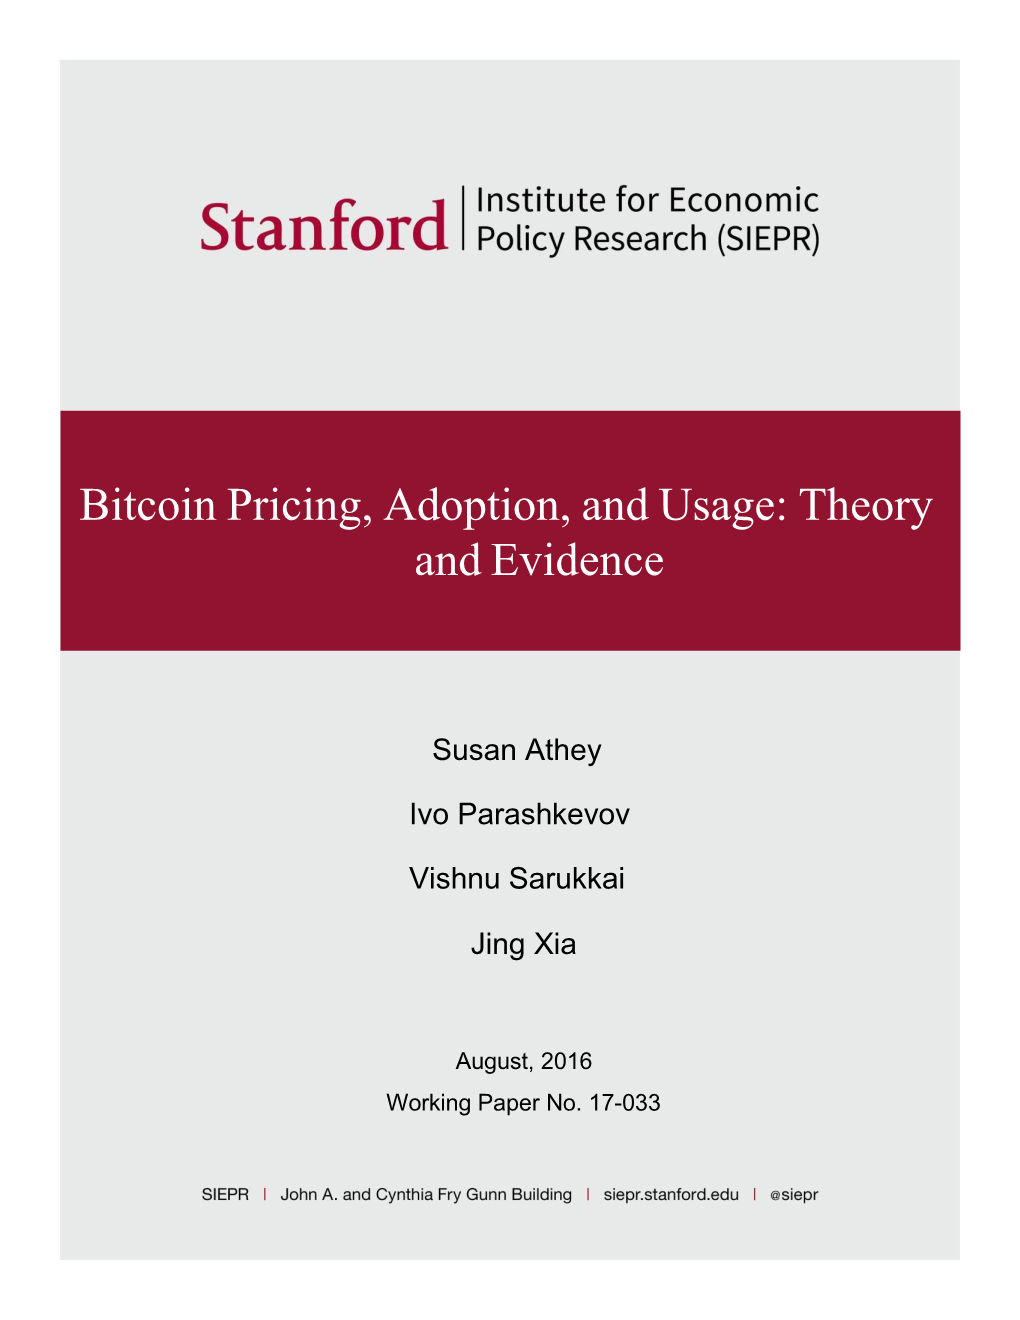 Bitcoin Pricing, Adoption, and Usage: Theory and Evidence